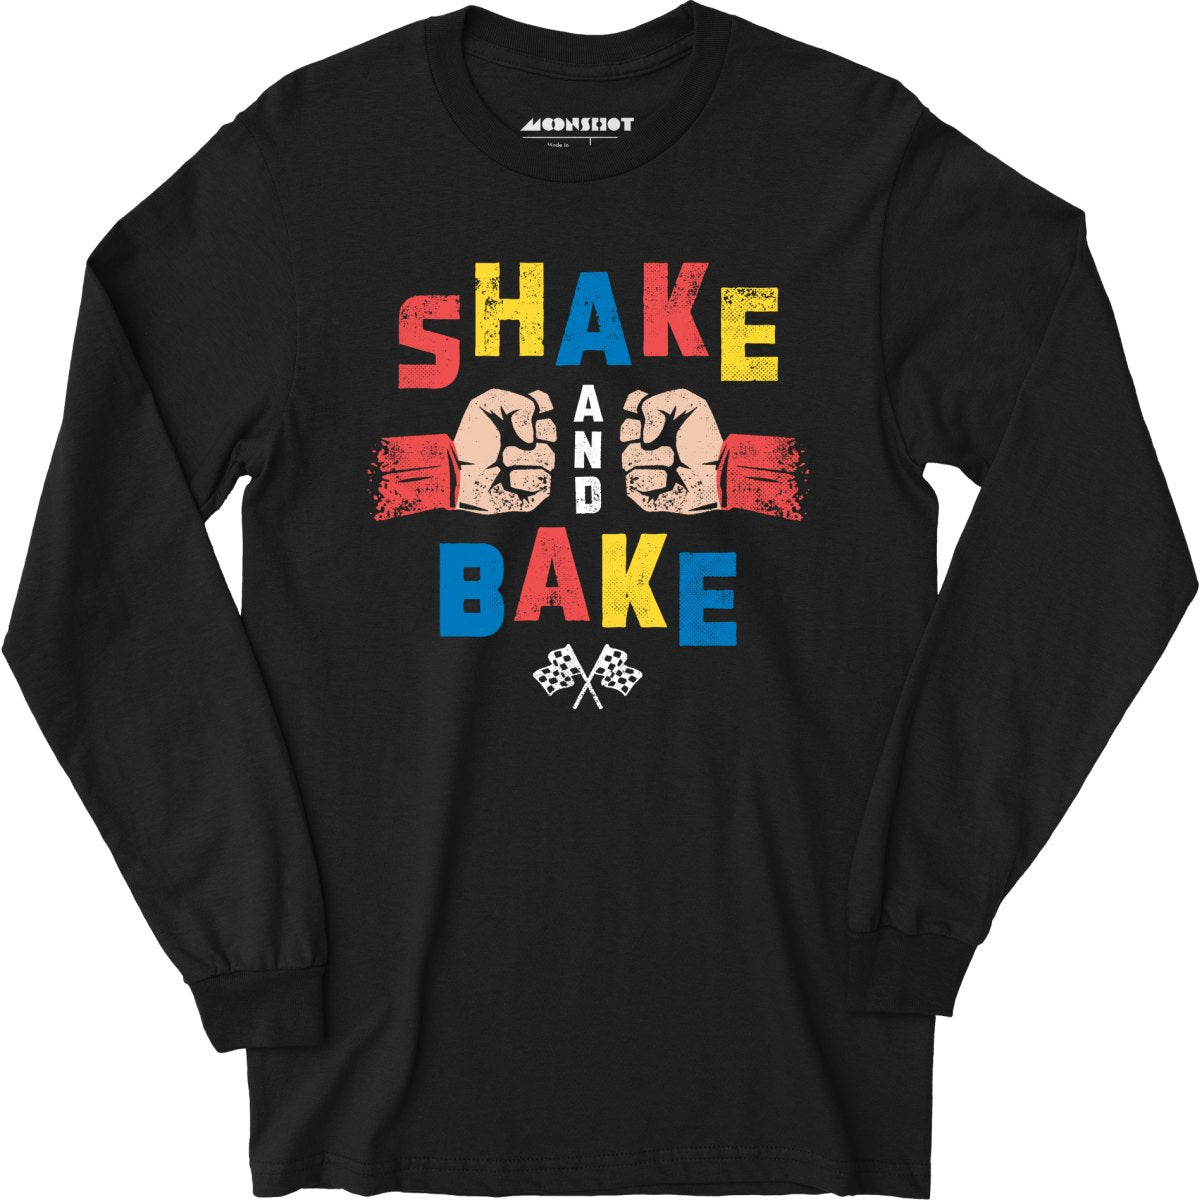 Shake and Bake - Long Sleeve T-Shirt